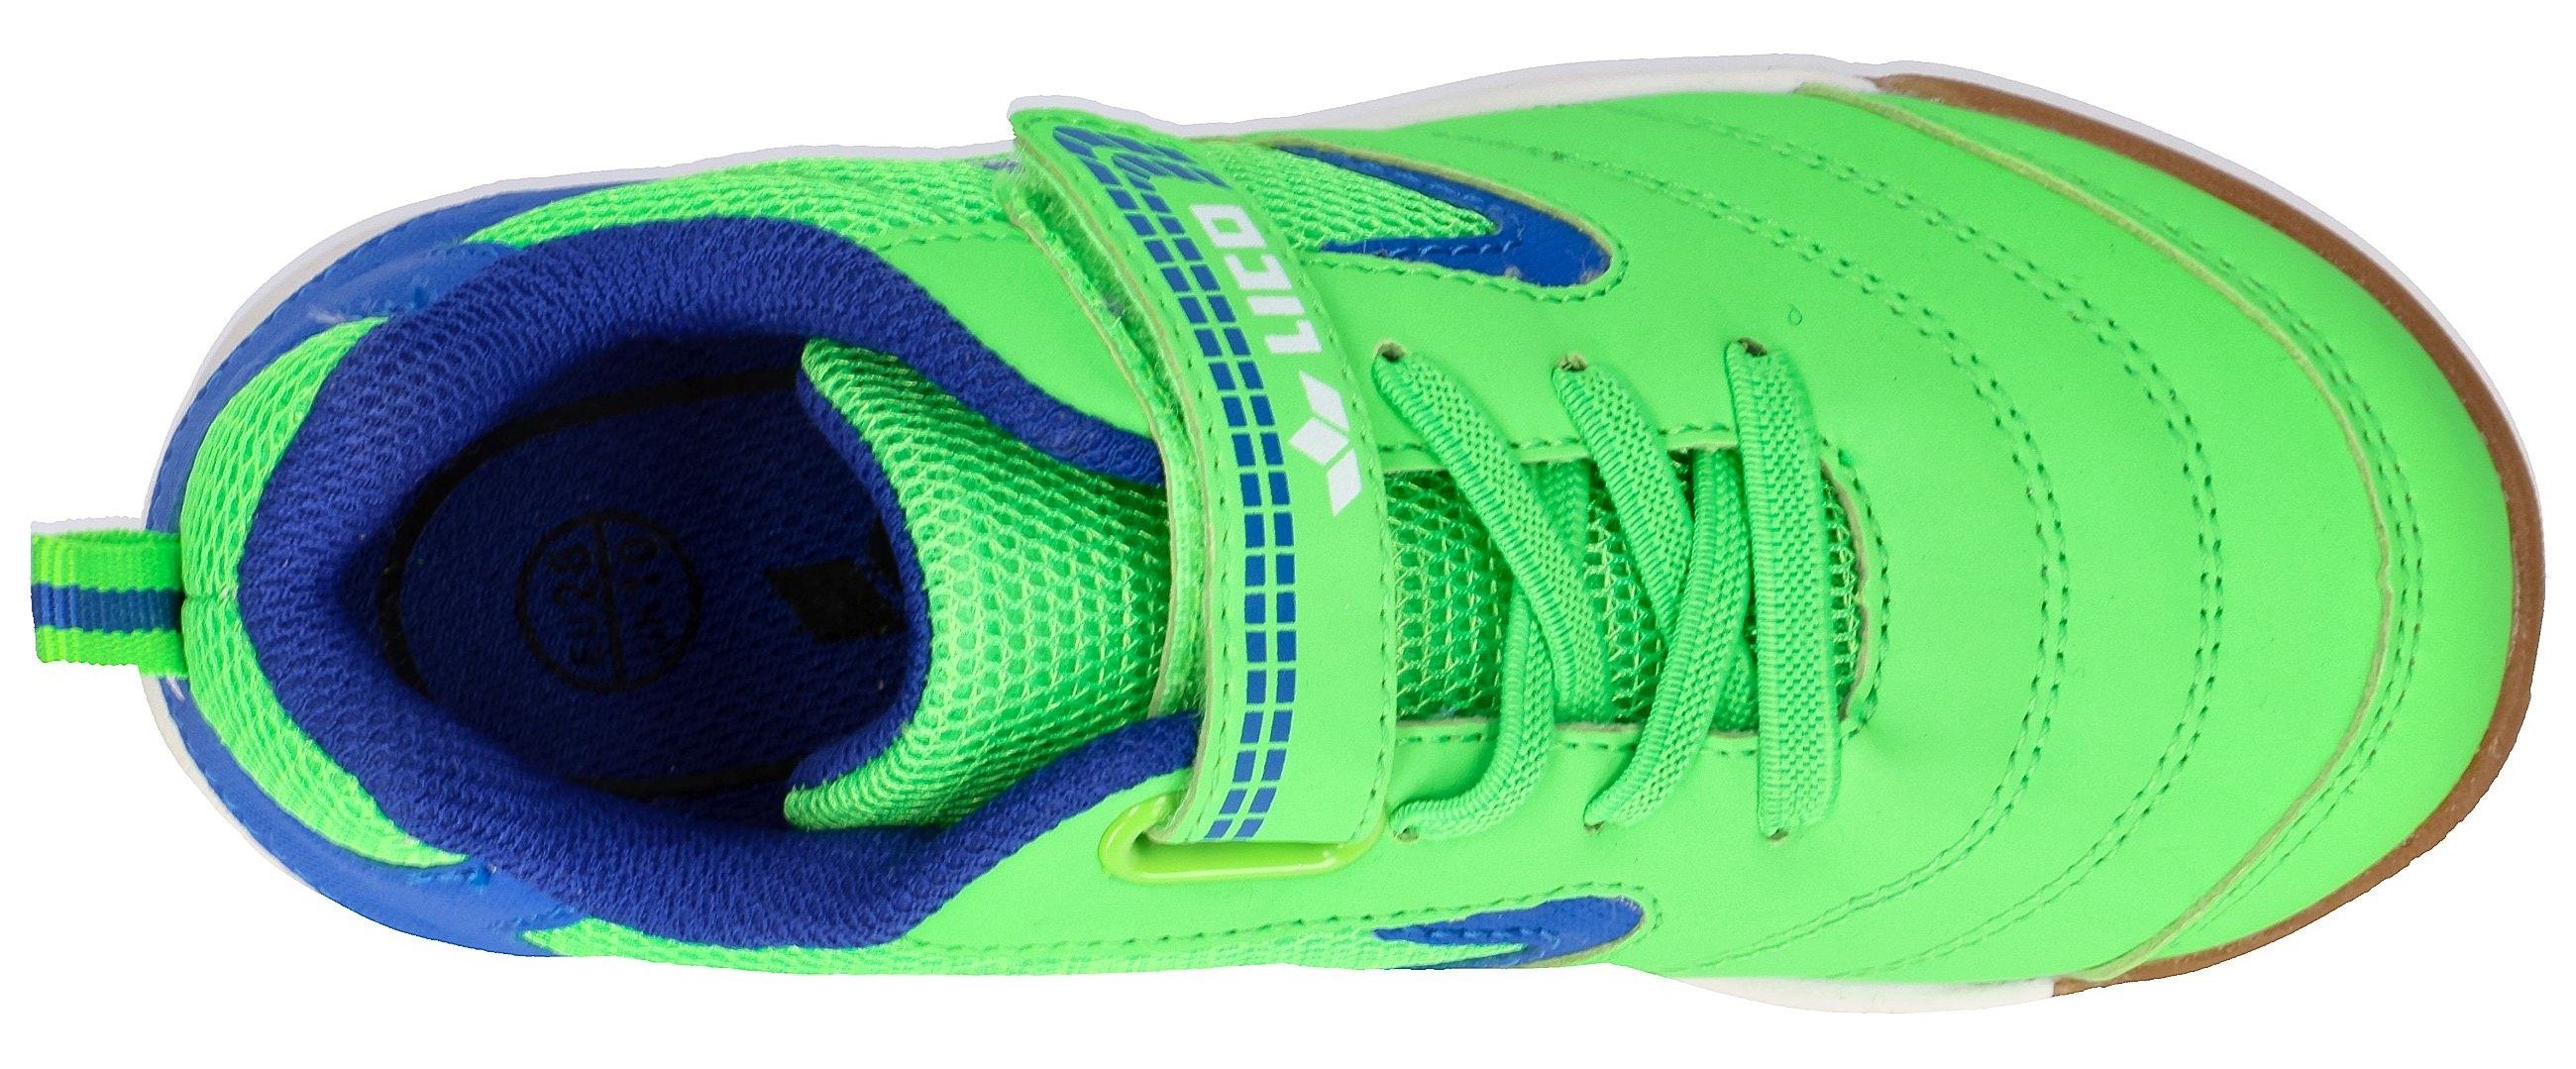 Lico Ari VS WMS heller mit grün-blau Laufsohle Sneaker